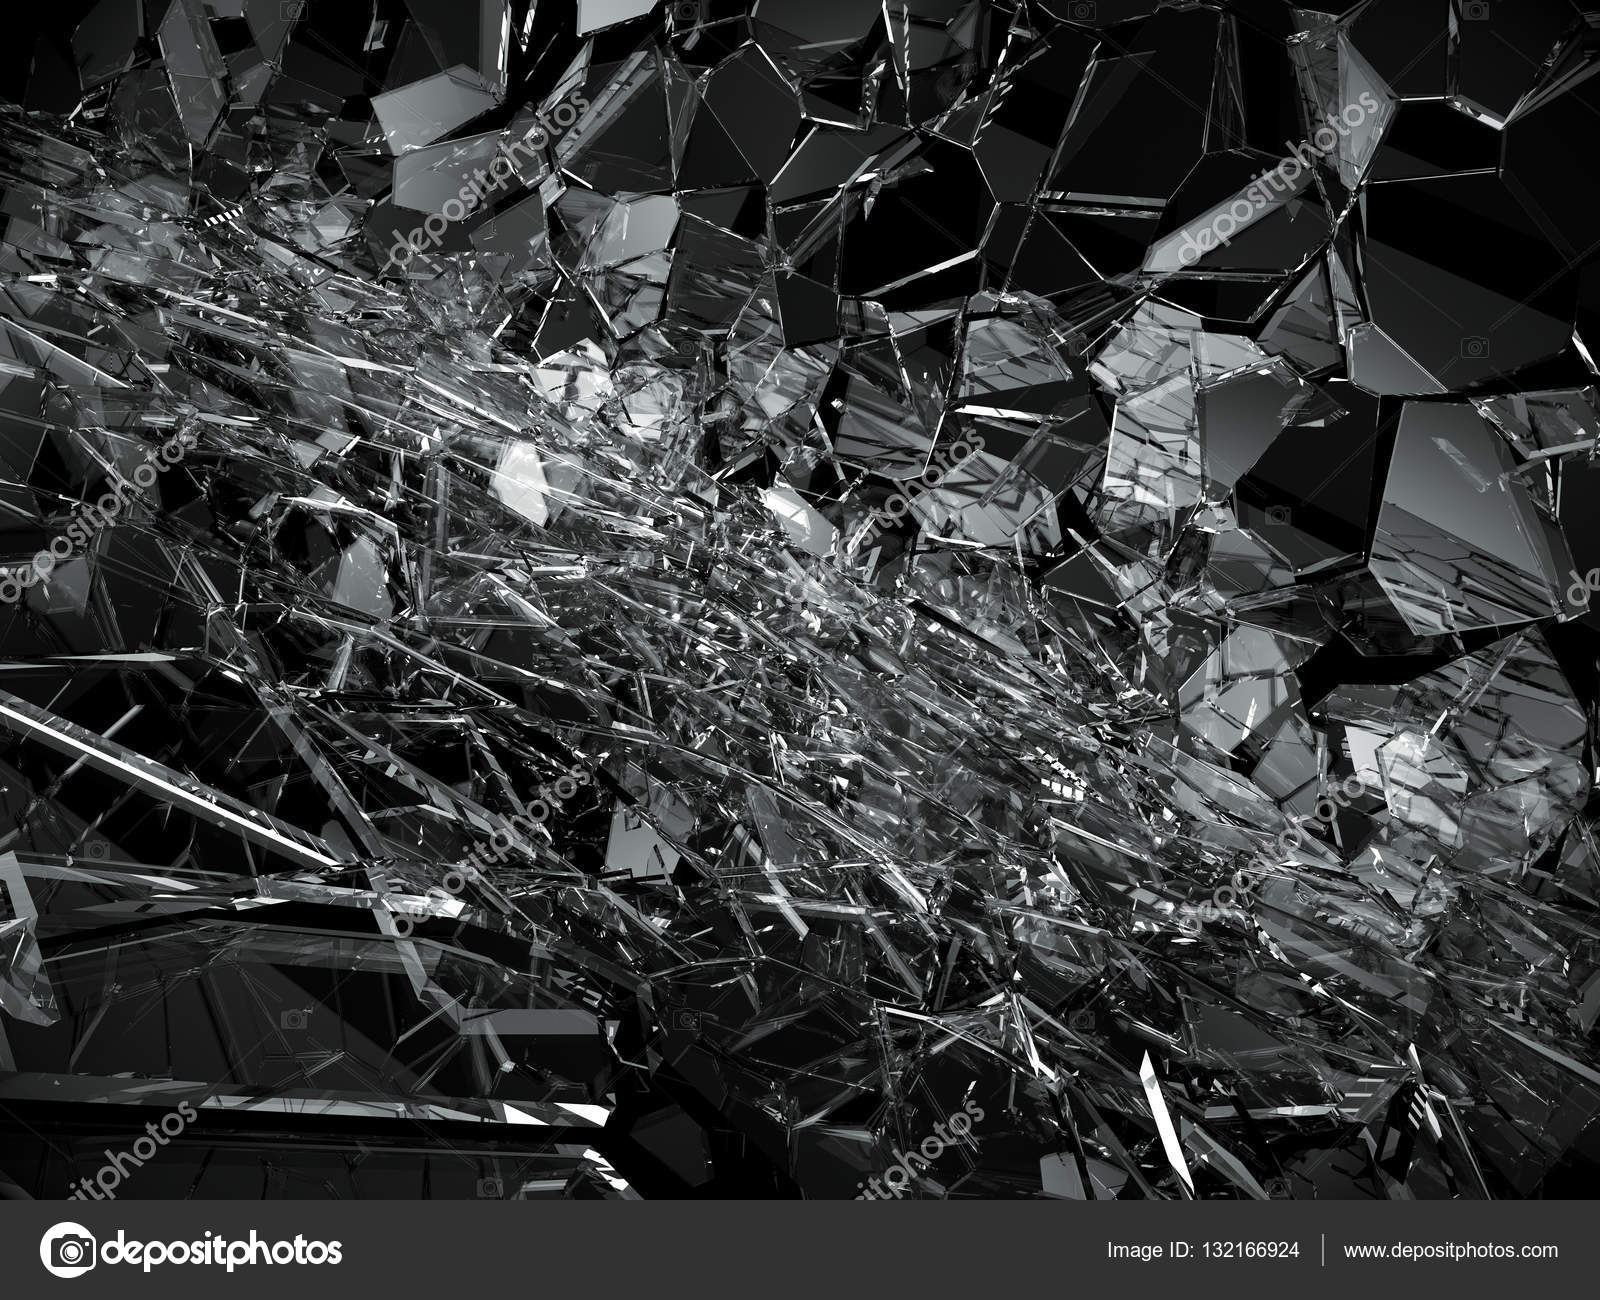 https://st3.depositphotos.com/1001696/13216/i/1600/depositphotos_132166924-stock-photo-shattered-or-broken-glass-pieces.jpg